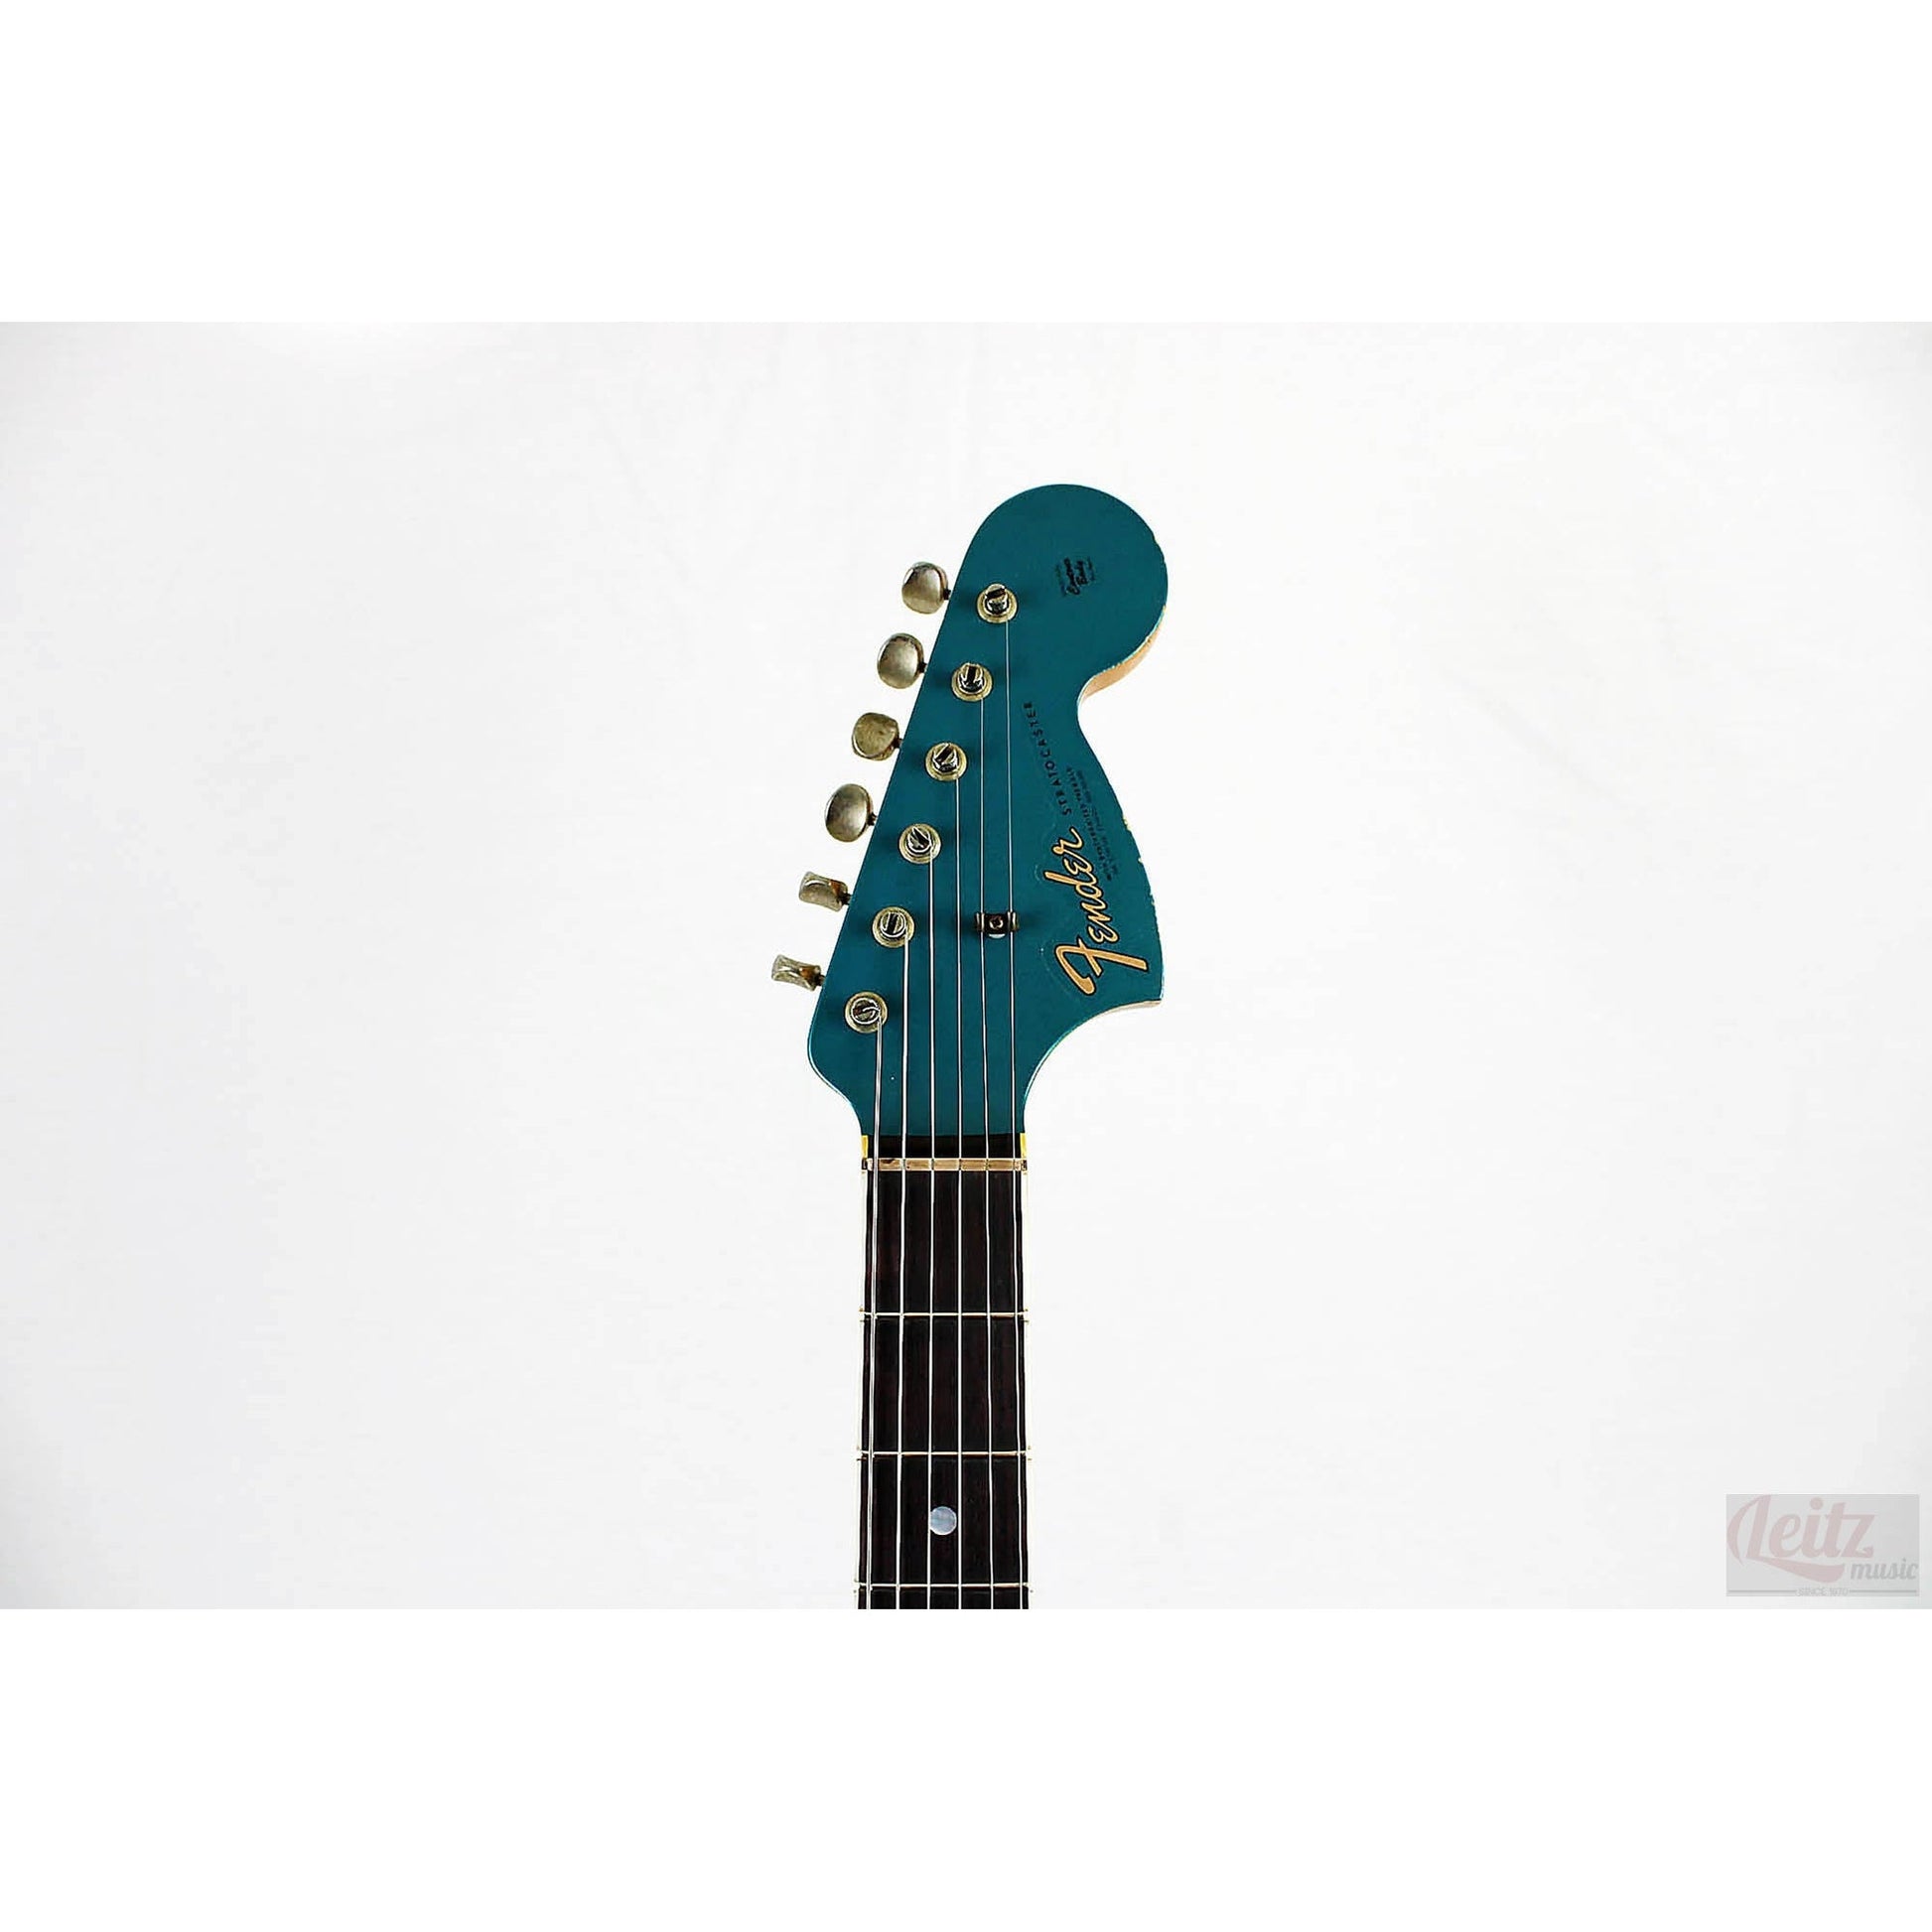 Fender Custom Shop Limited Edition 1967 Stratocaster Heavy Relic - Aged Ocean Turquoise over 3 Color Sunburst - Leitz Music